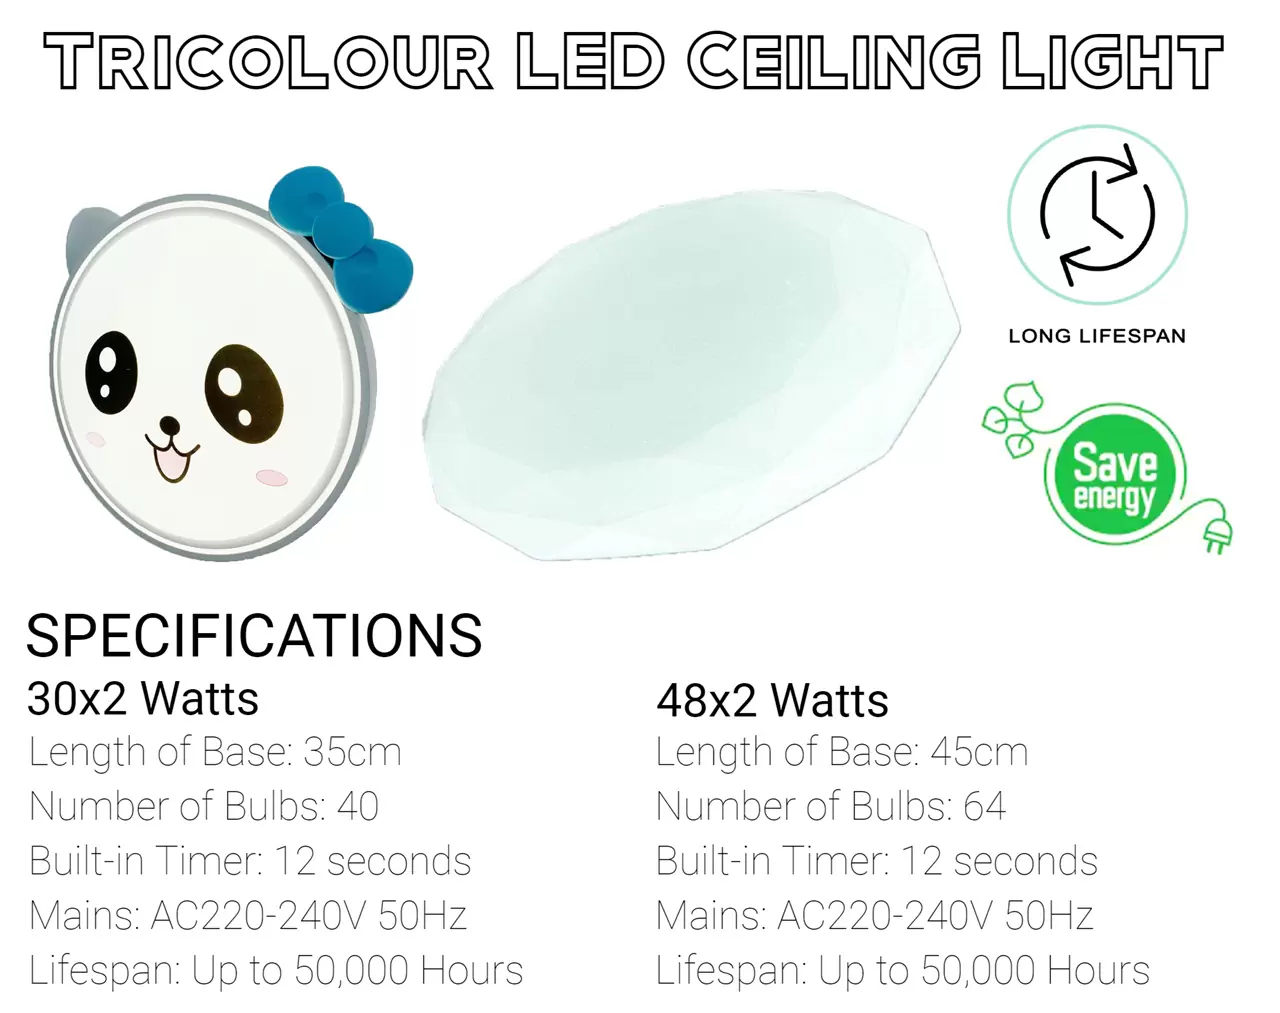 Tricolour LED Ceiling Light Specification